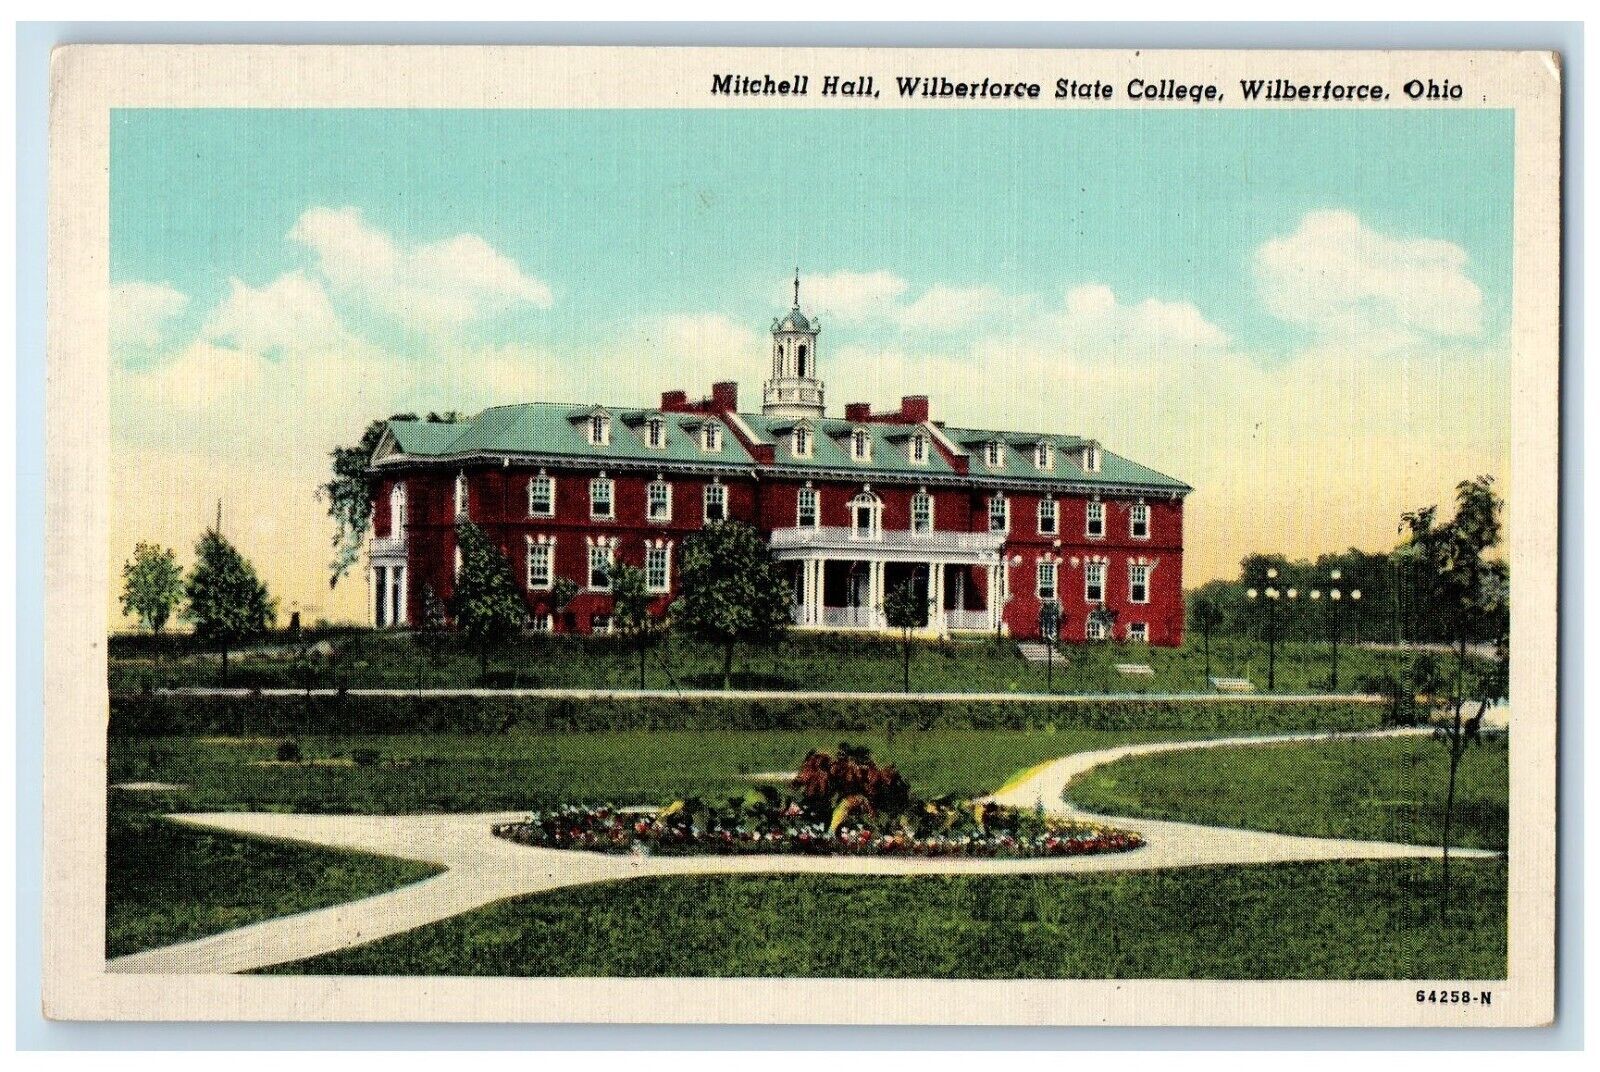 c1940 Mitchell Hall Wilberforce State College Wilberforce Ohio Vintage Postcard